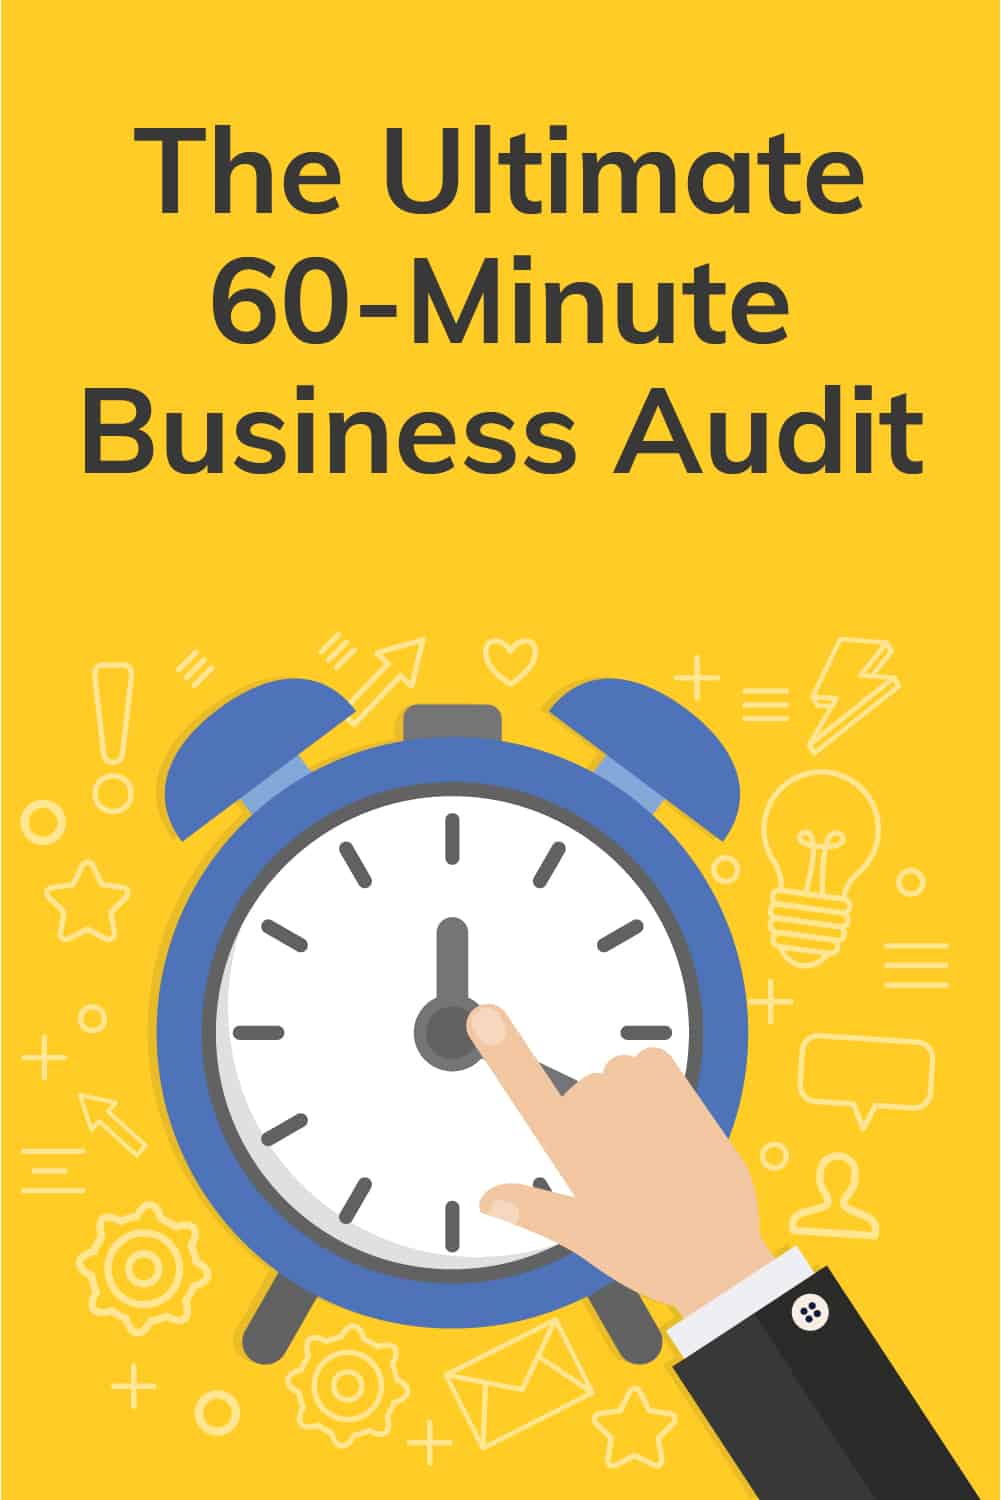 The Ultimate 60-Minute Business Audit via @scopedesign